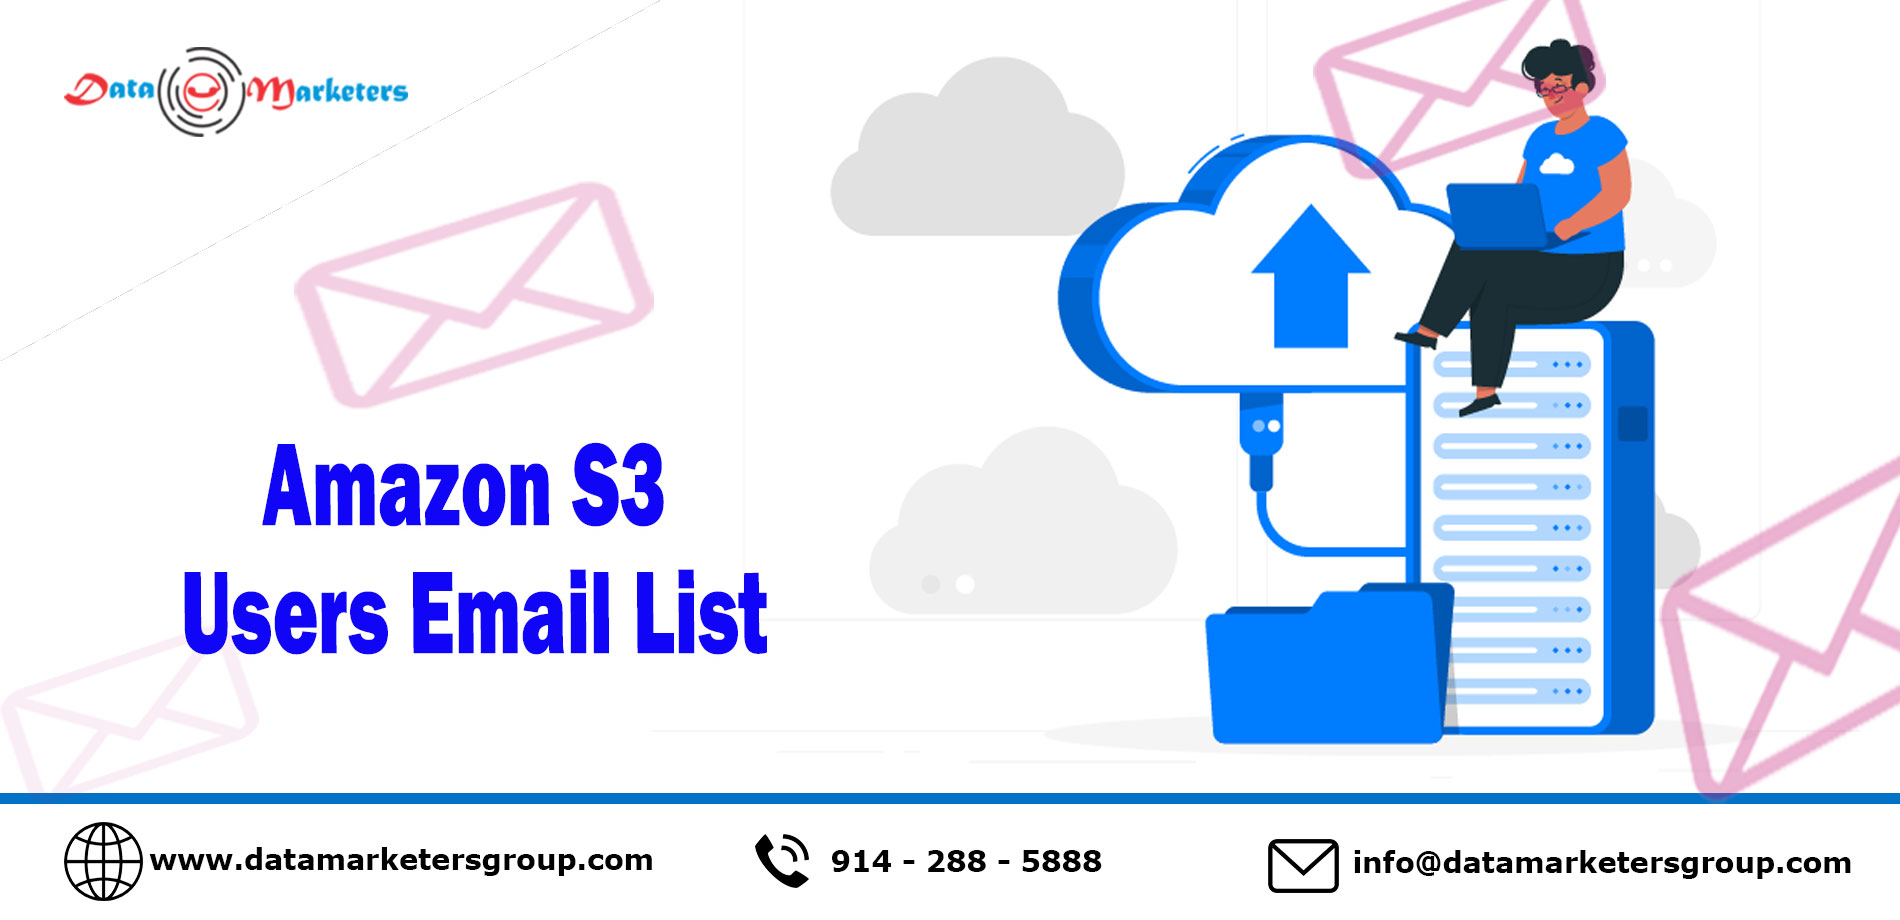 Amazon S3 Users Email List | Amazon S3 Users List | Amazon S3 Customers List 